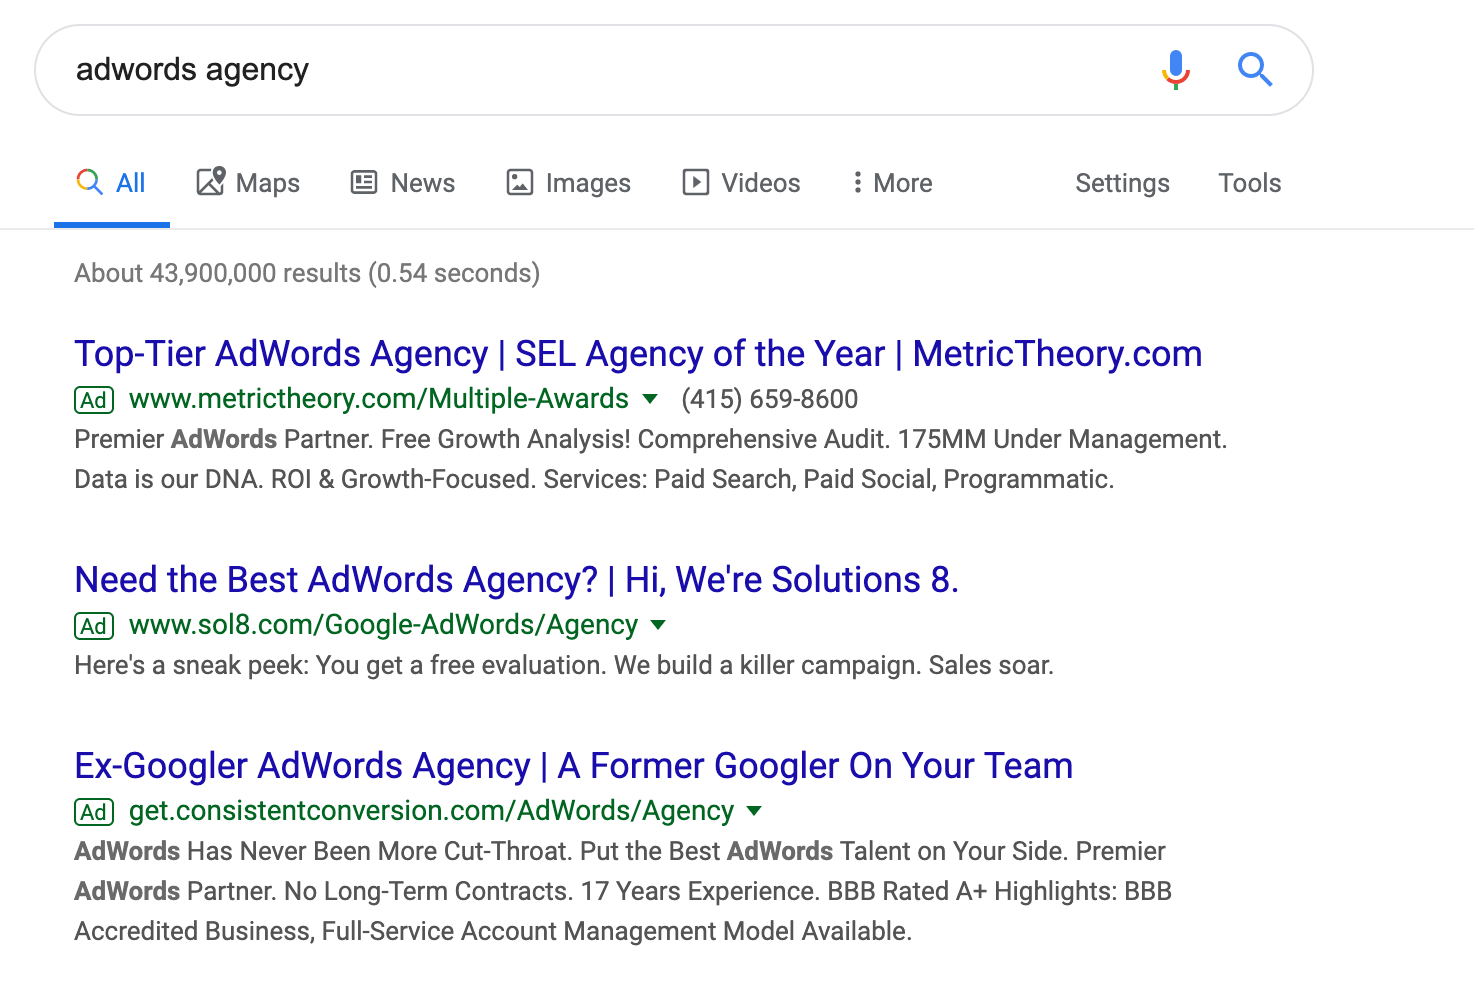 getting leads through google ads